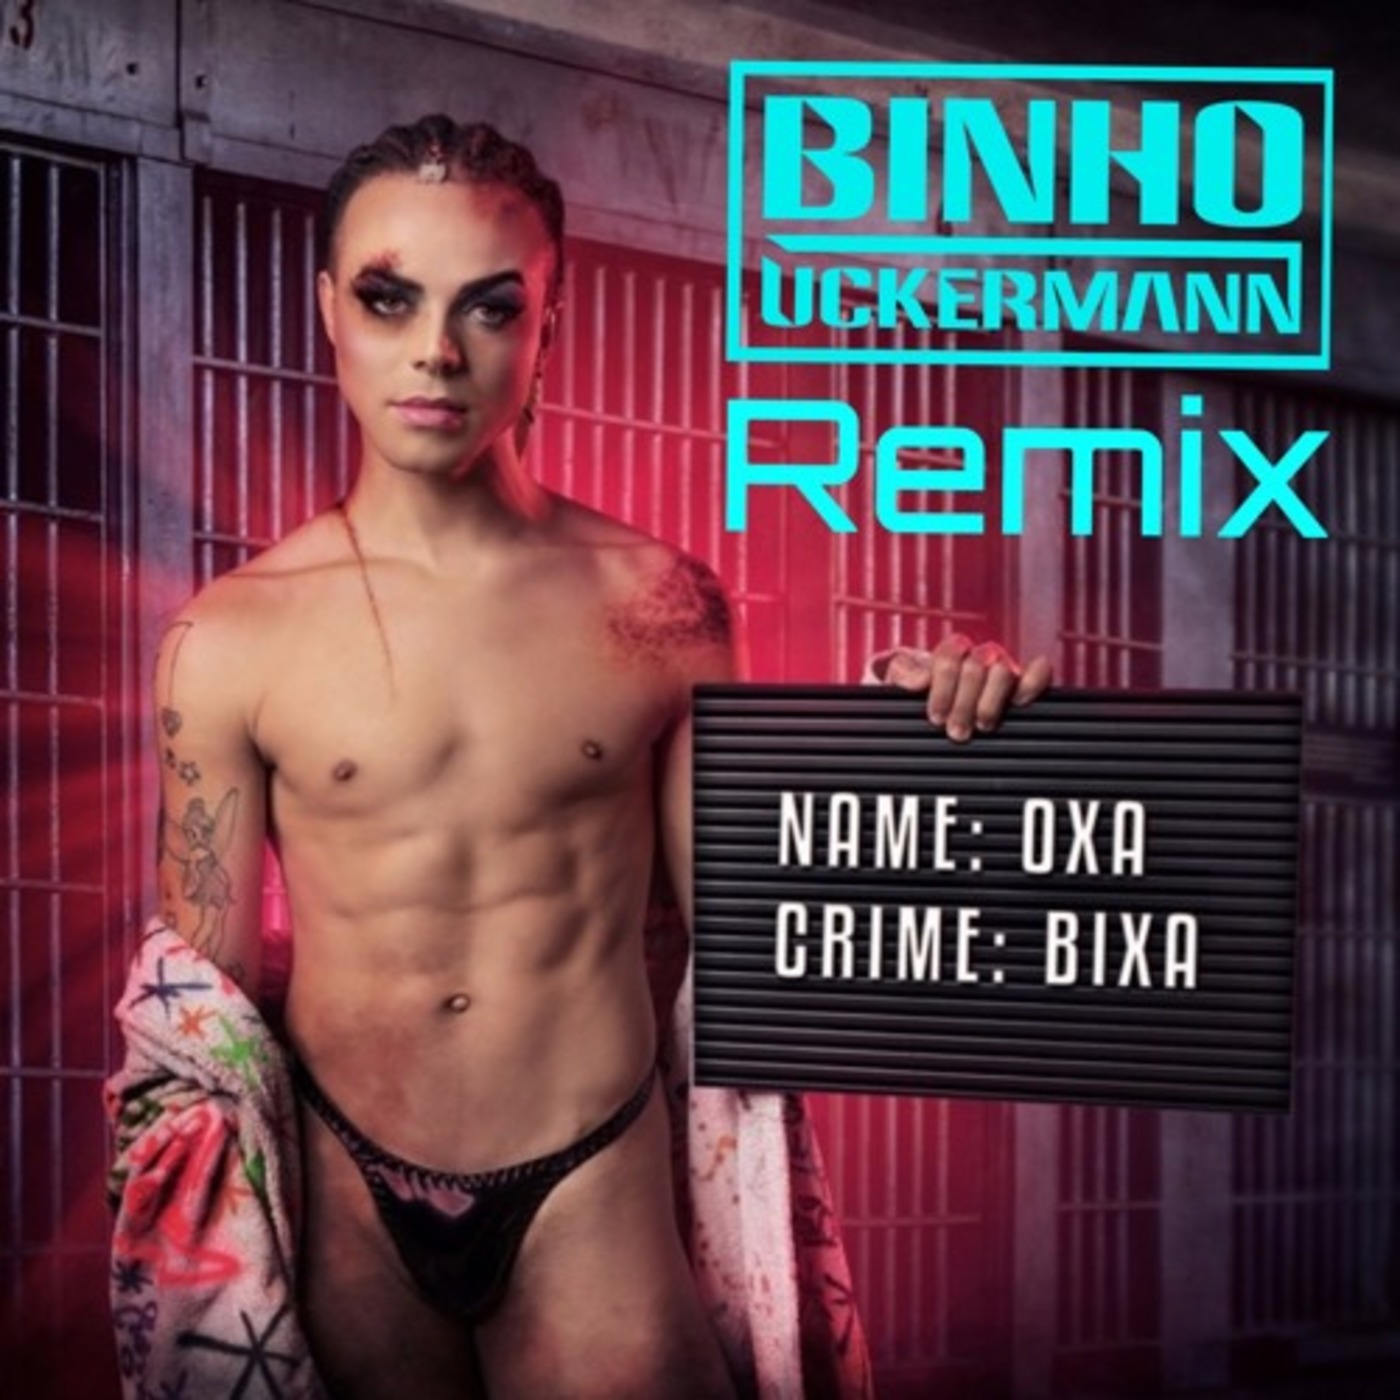 Oxa - Bixa (Binho Uckermann Remix) Buy on 320Kbps